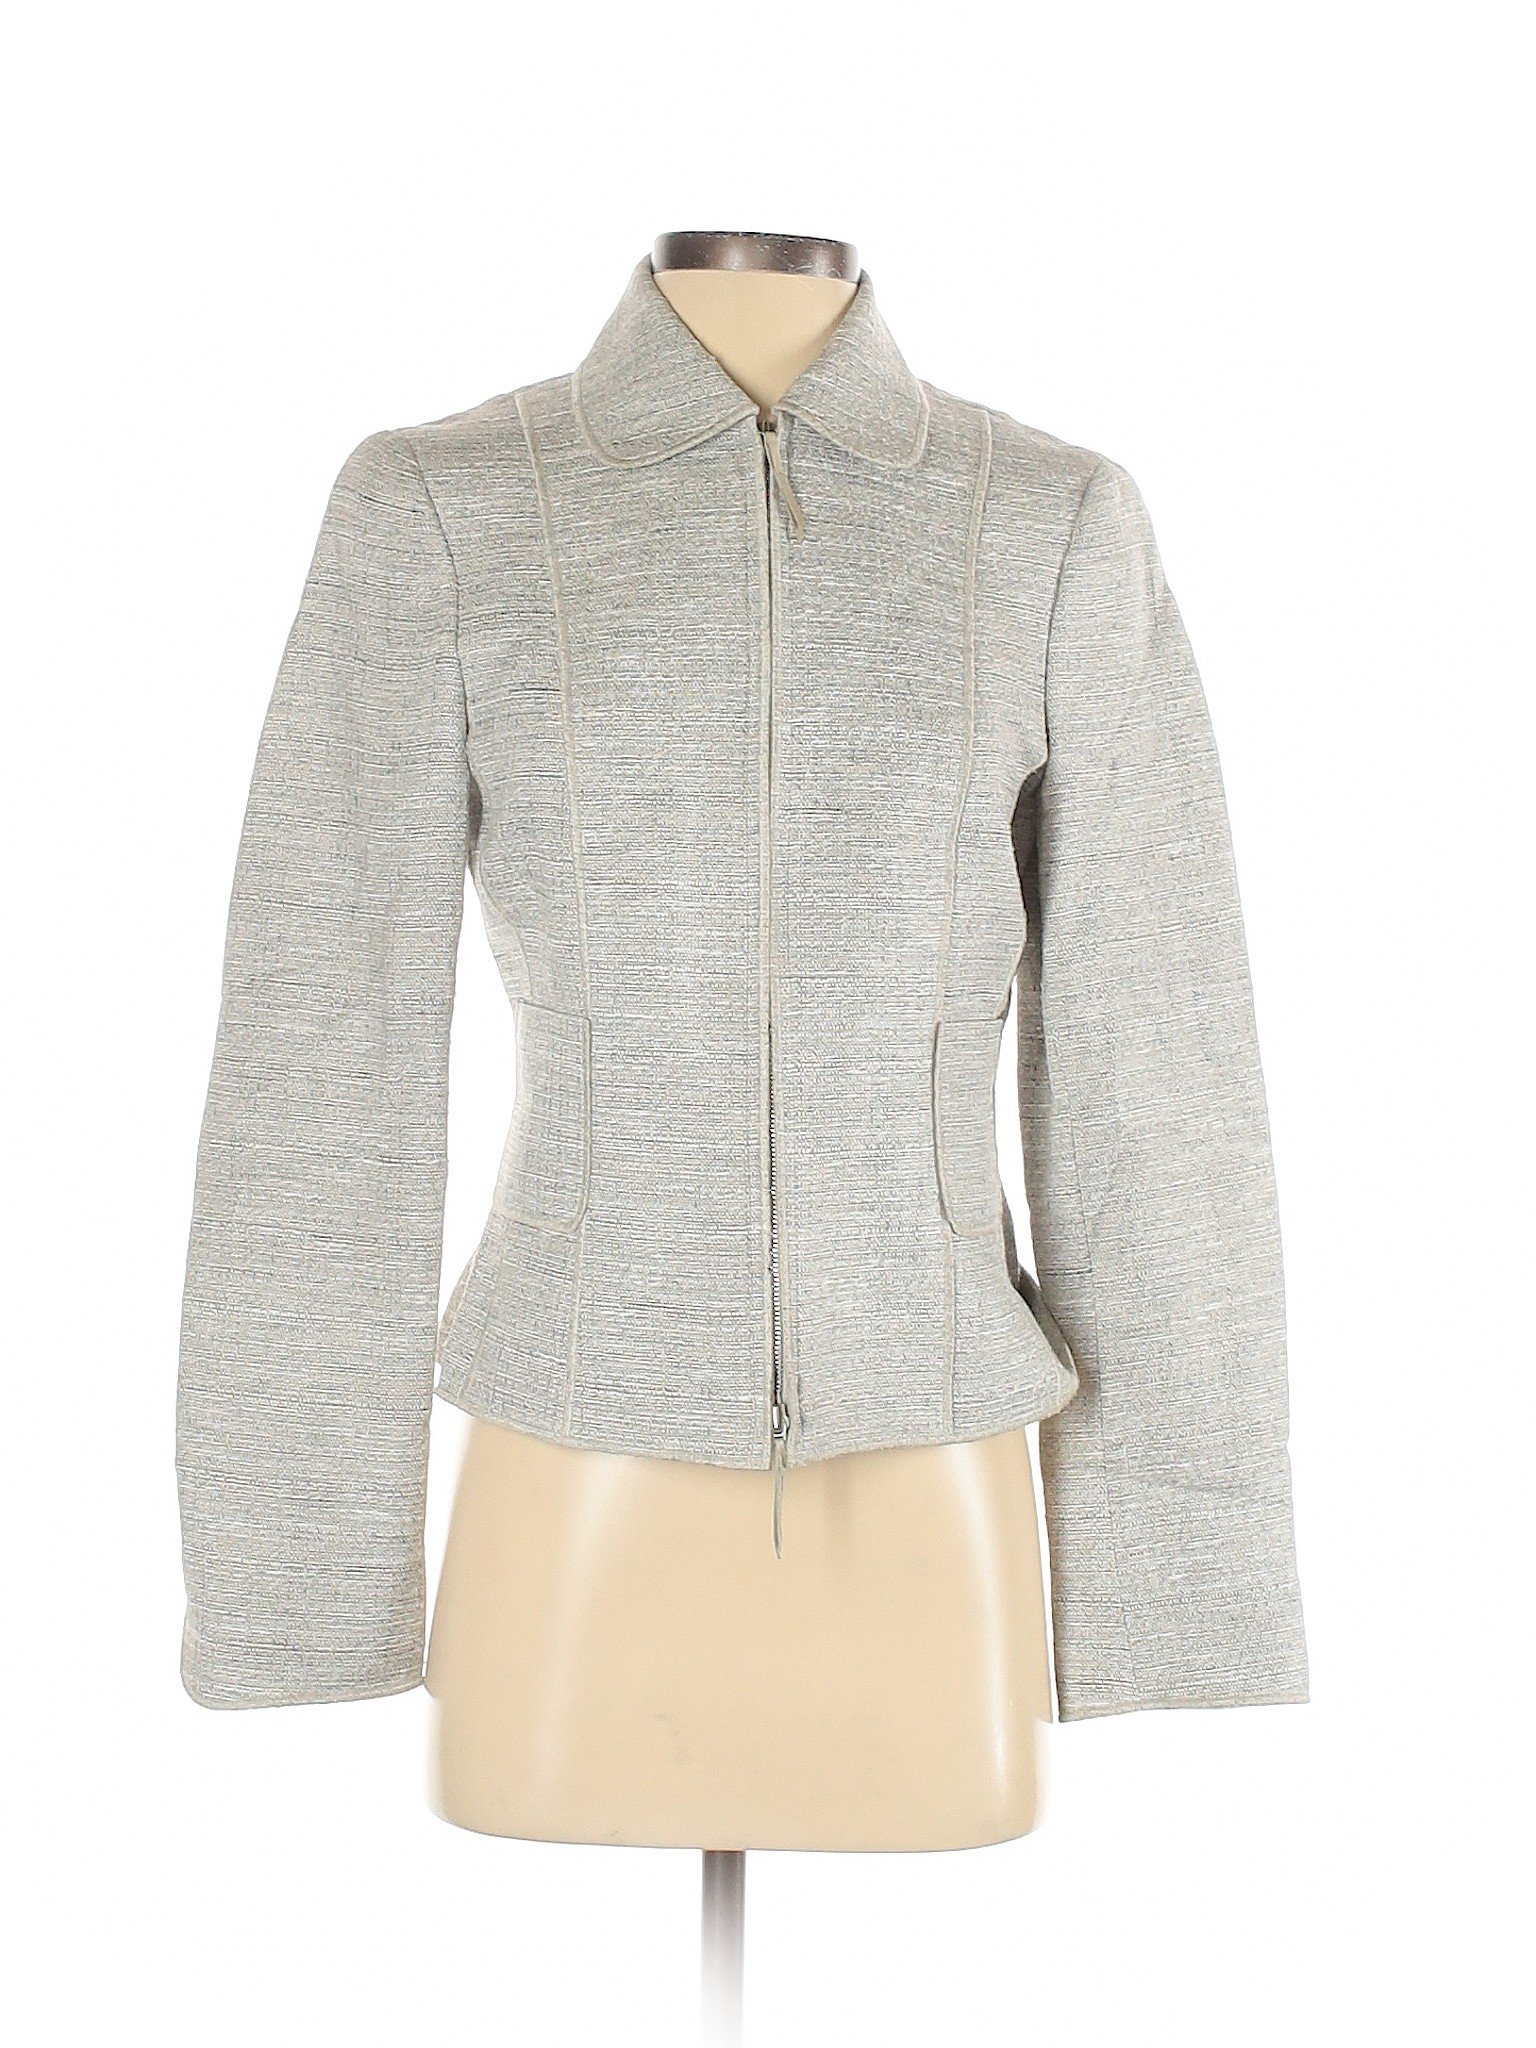 Akris Punto Women Gray Jacket 4 | eBay